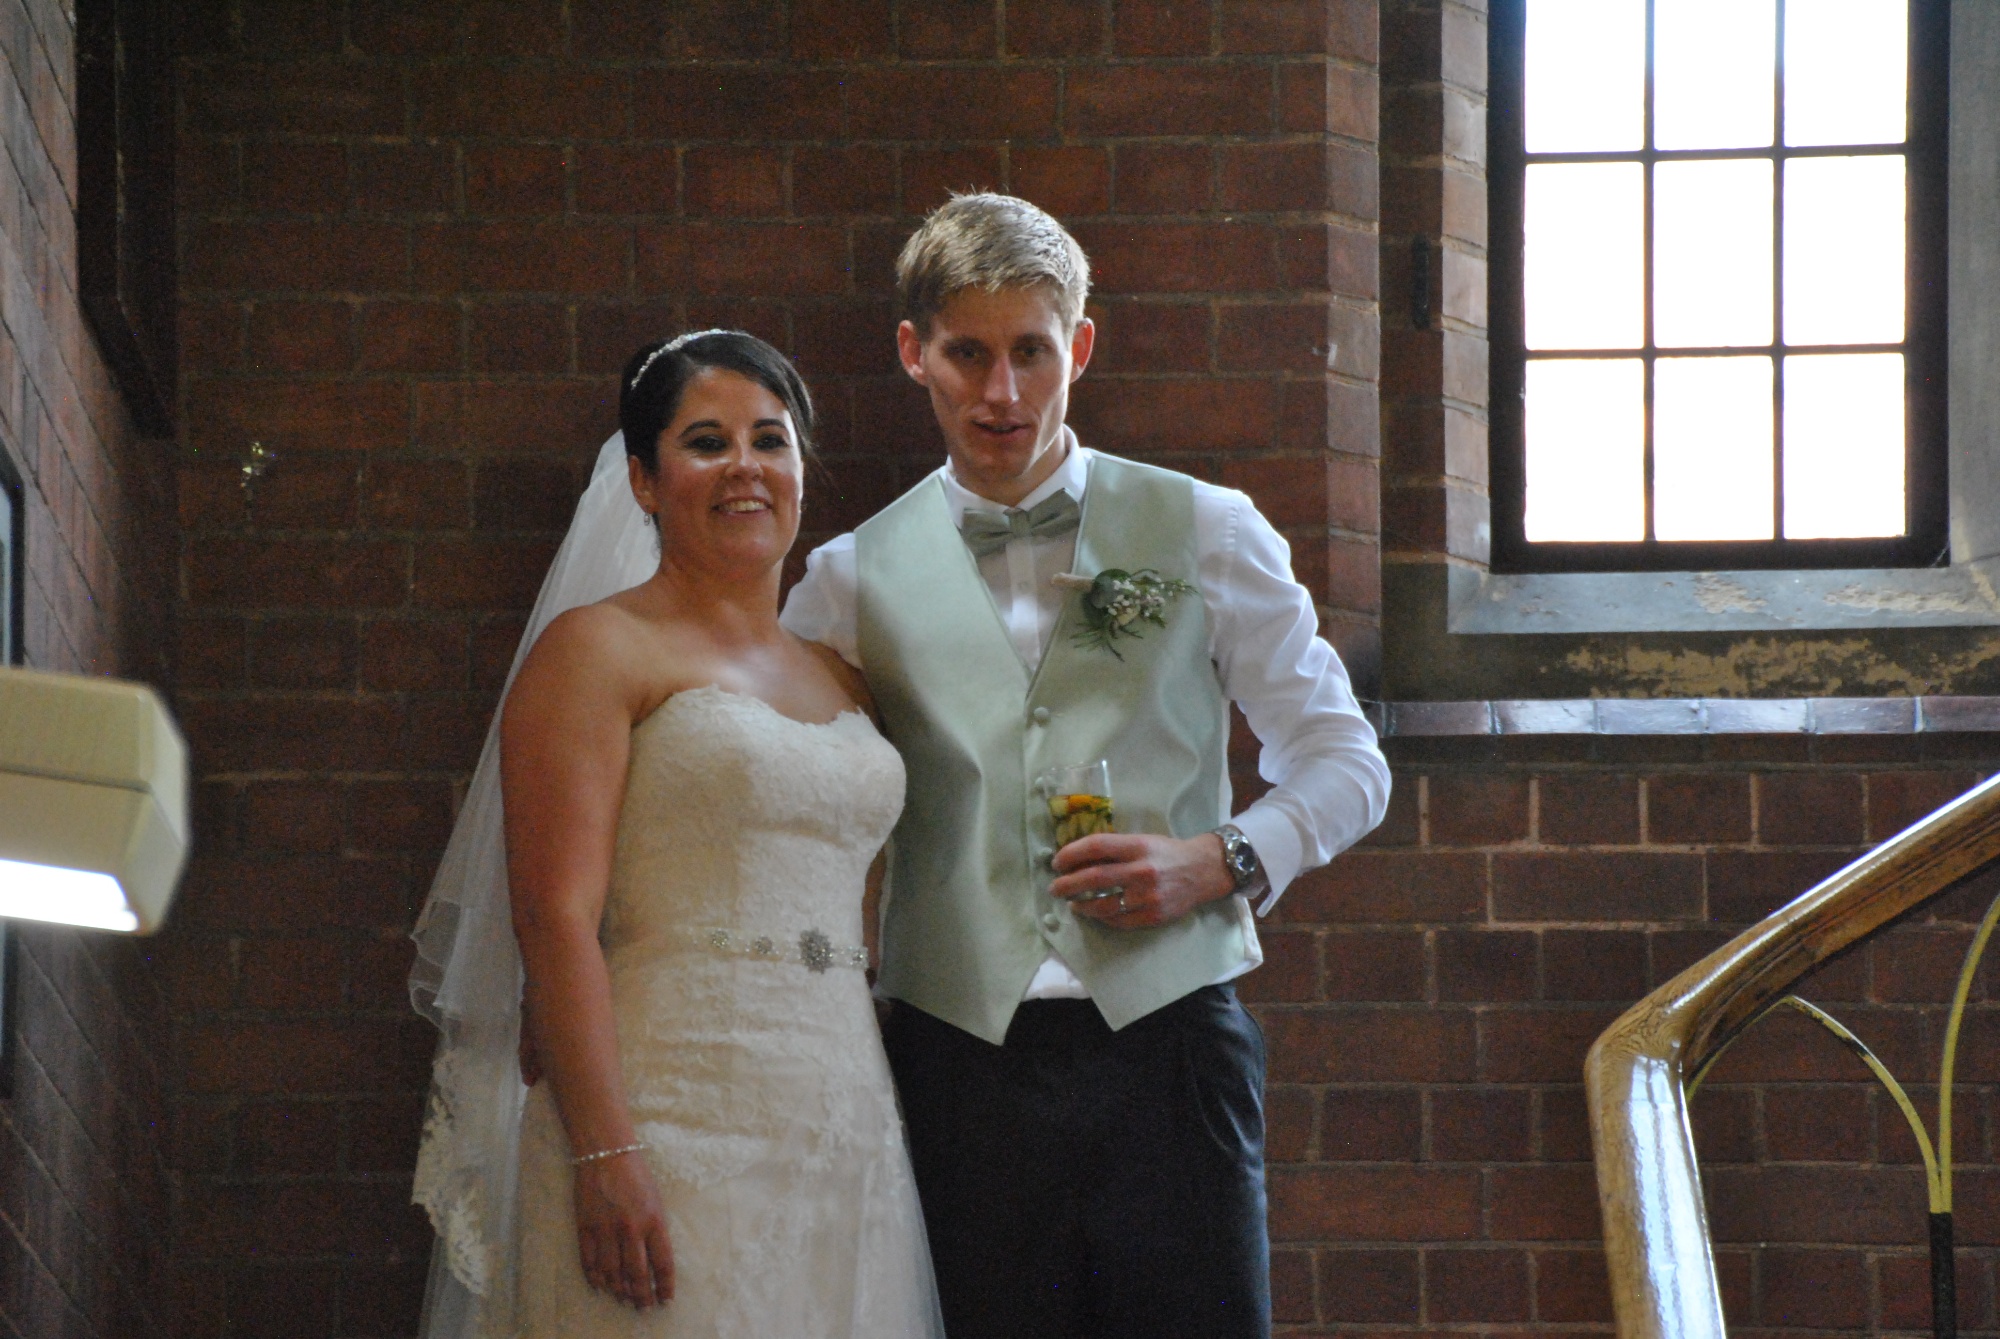 Worksop College - Tim & Sarah's Wedding Day